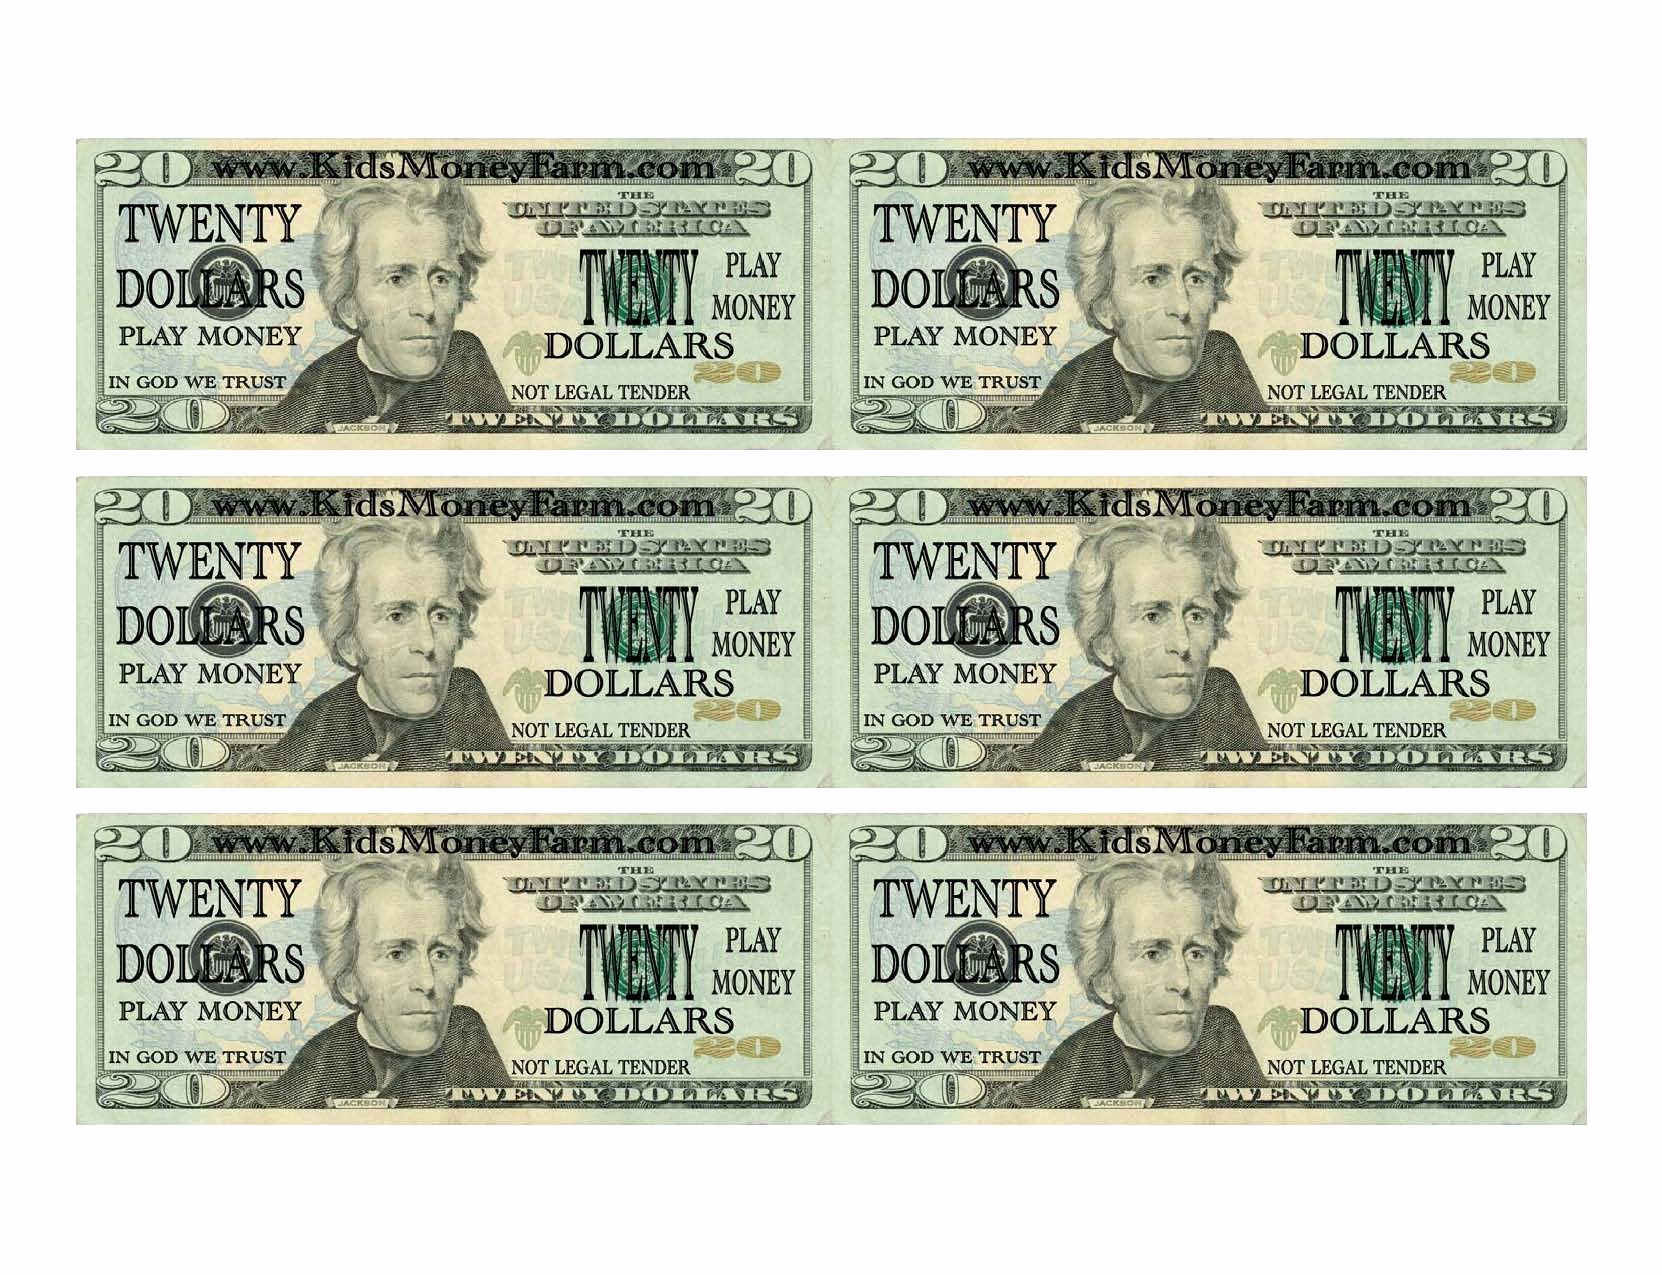 Free Printable Fake Money That Looks Real - Free Printable A To Z